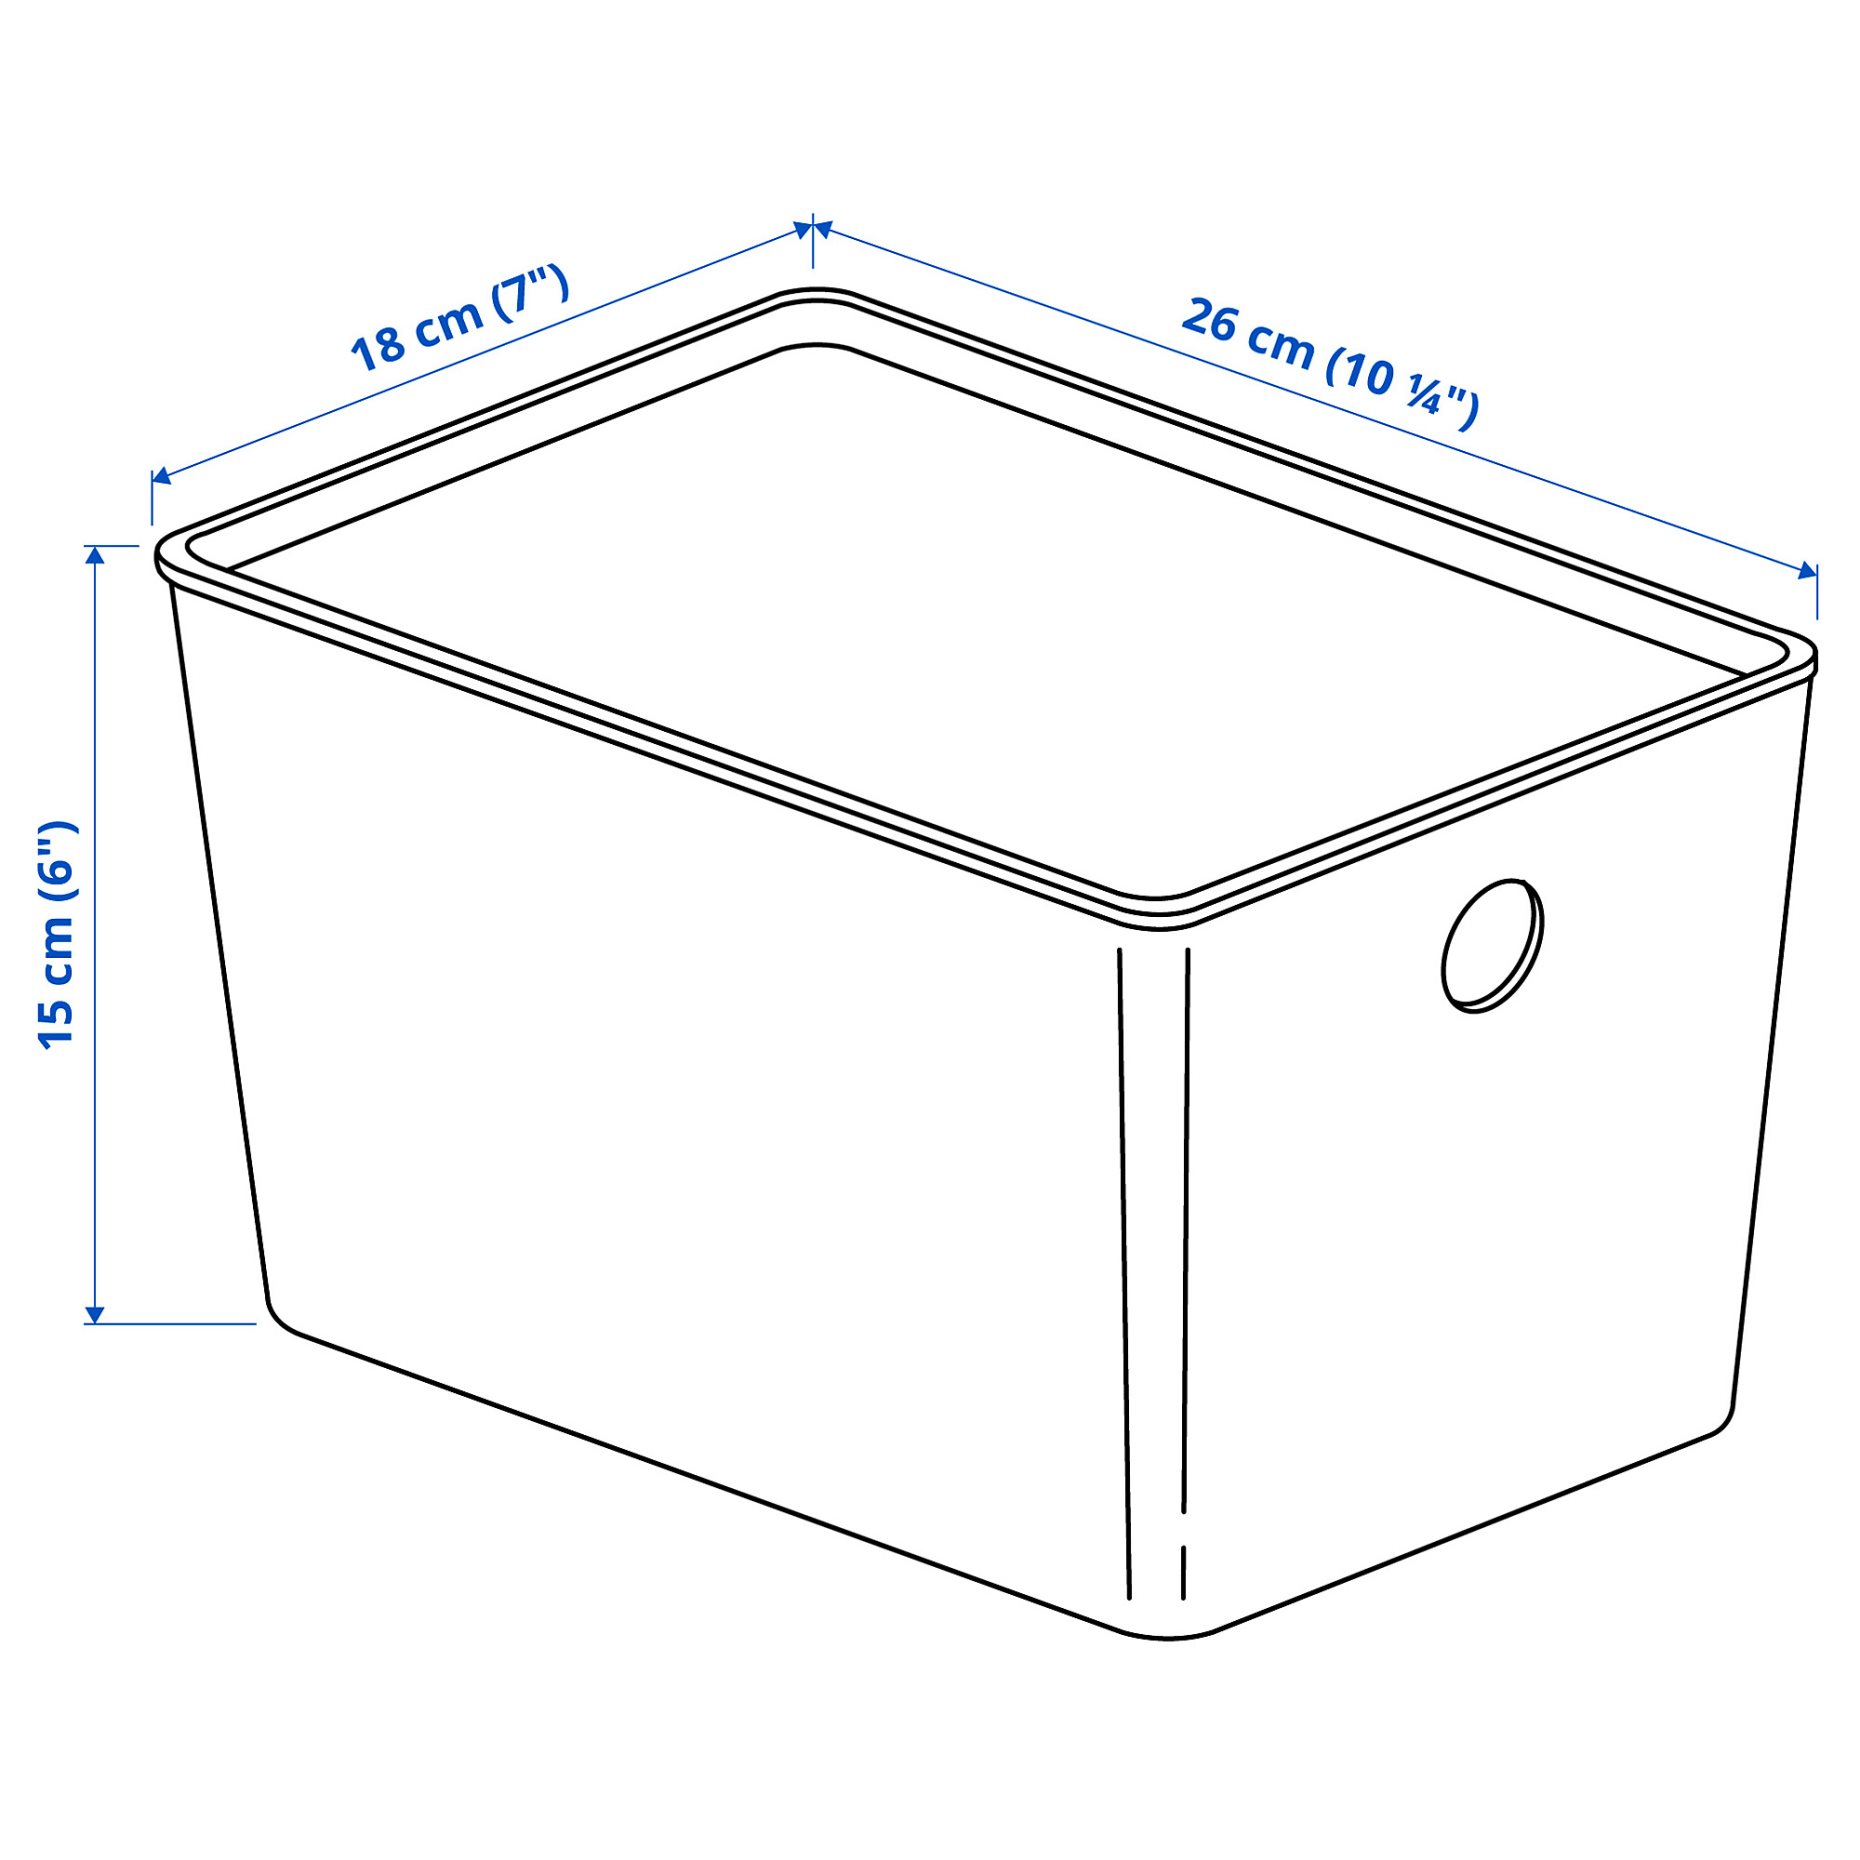 KUGGIS, κουτί με καπάκι/διαφανές, 18x26x15 cm, 005.140.33